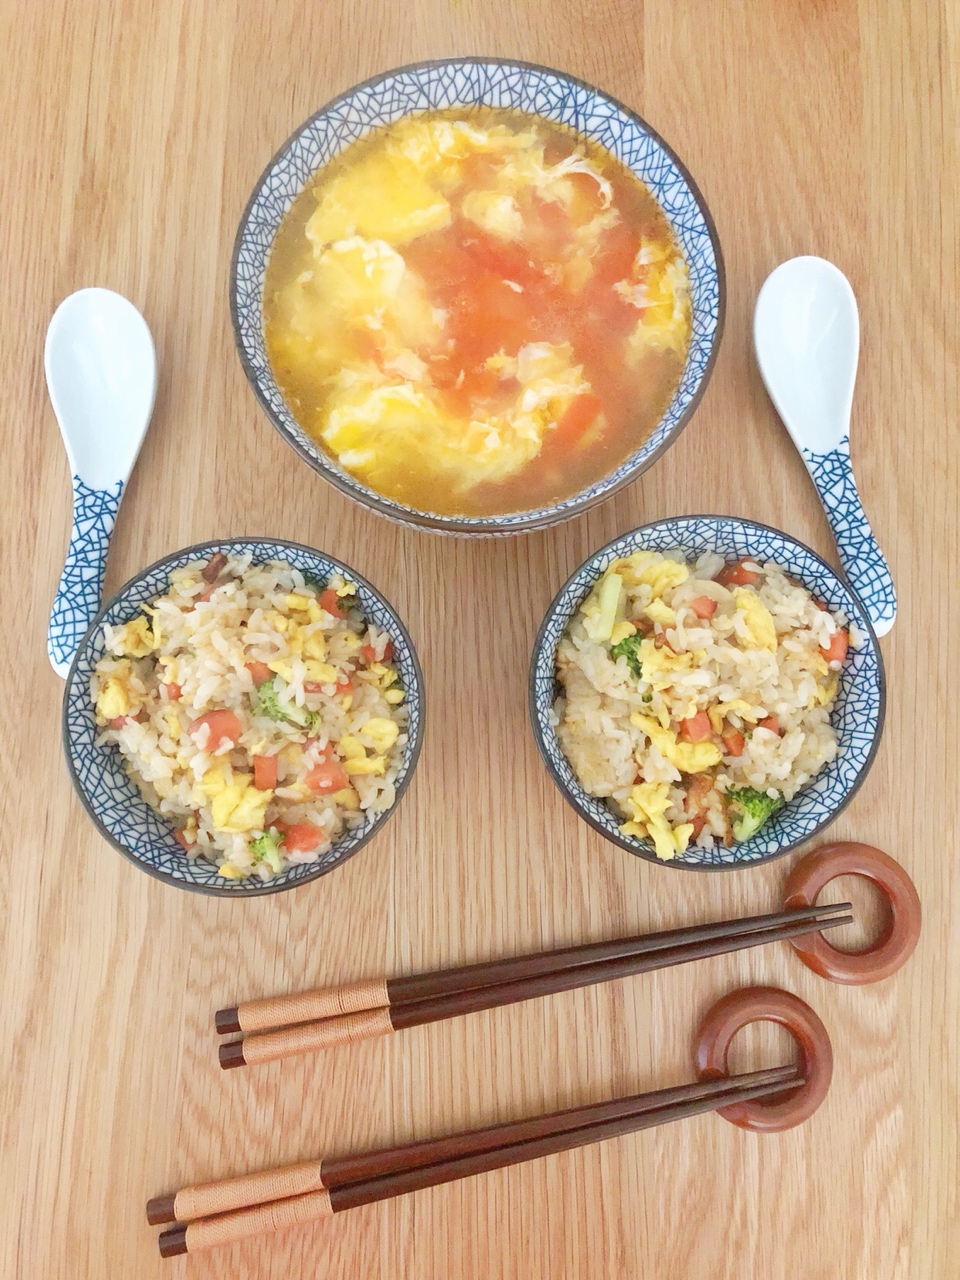 DAY 18 土豆火腿蔬菜焖饭 + 番茄蛋花汤 + 水果